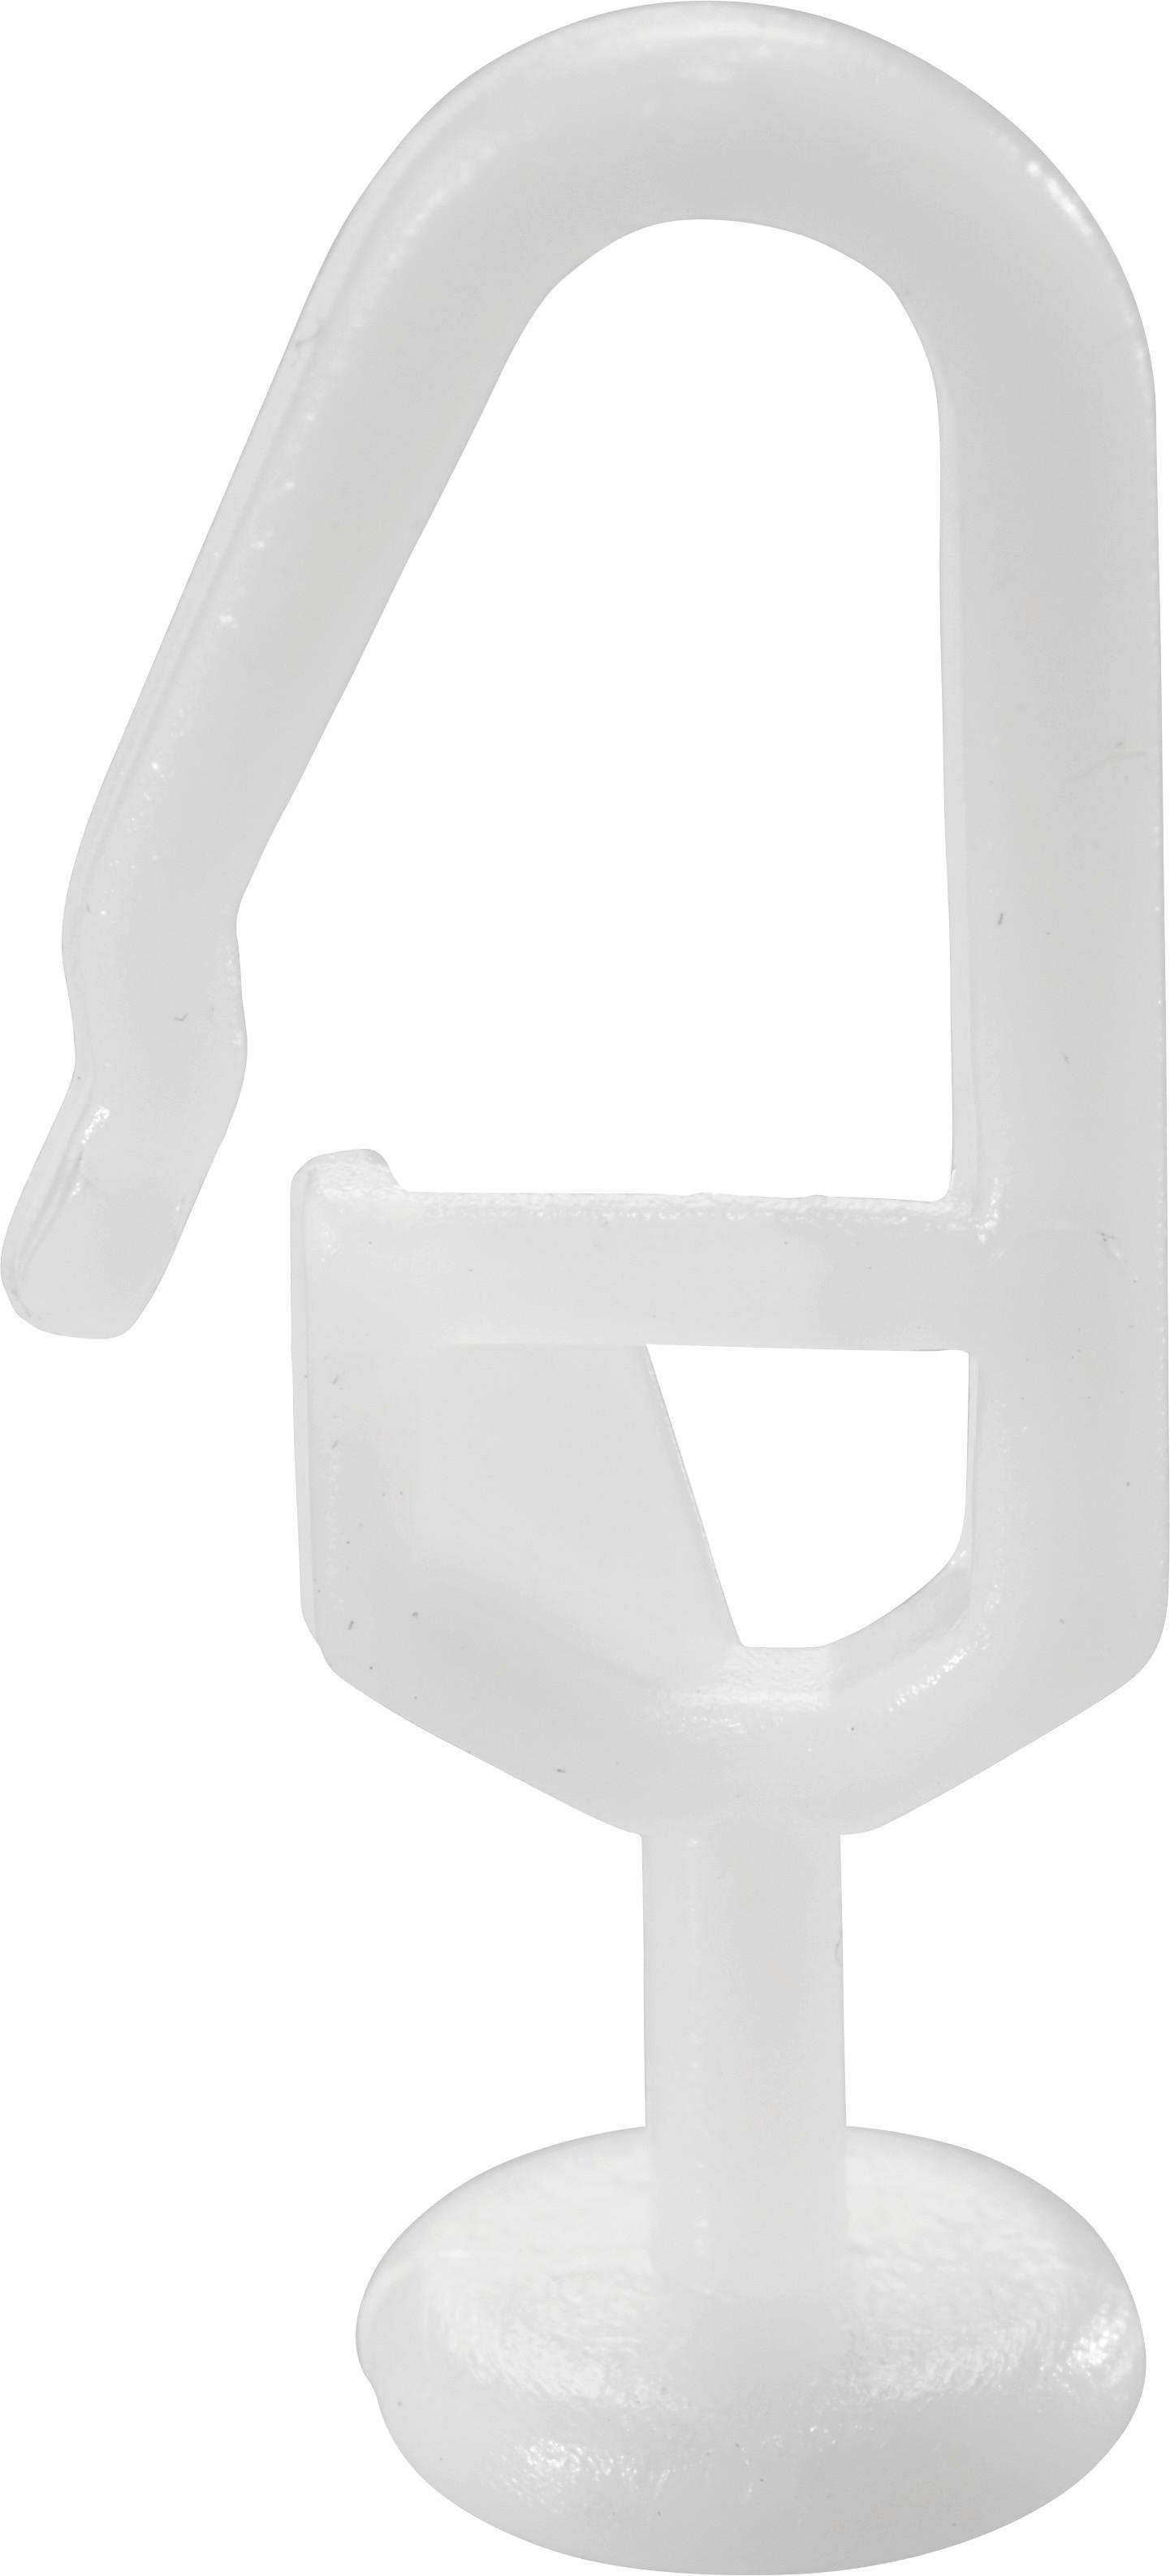 Gleiter Amelie in Weiß, 20er Pack. - Weiß, Kunststoff (0.9/2.5cm) - Modern Living